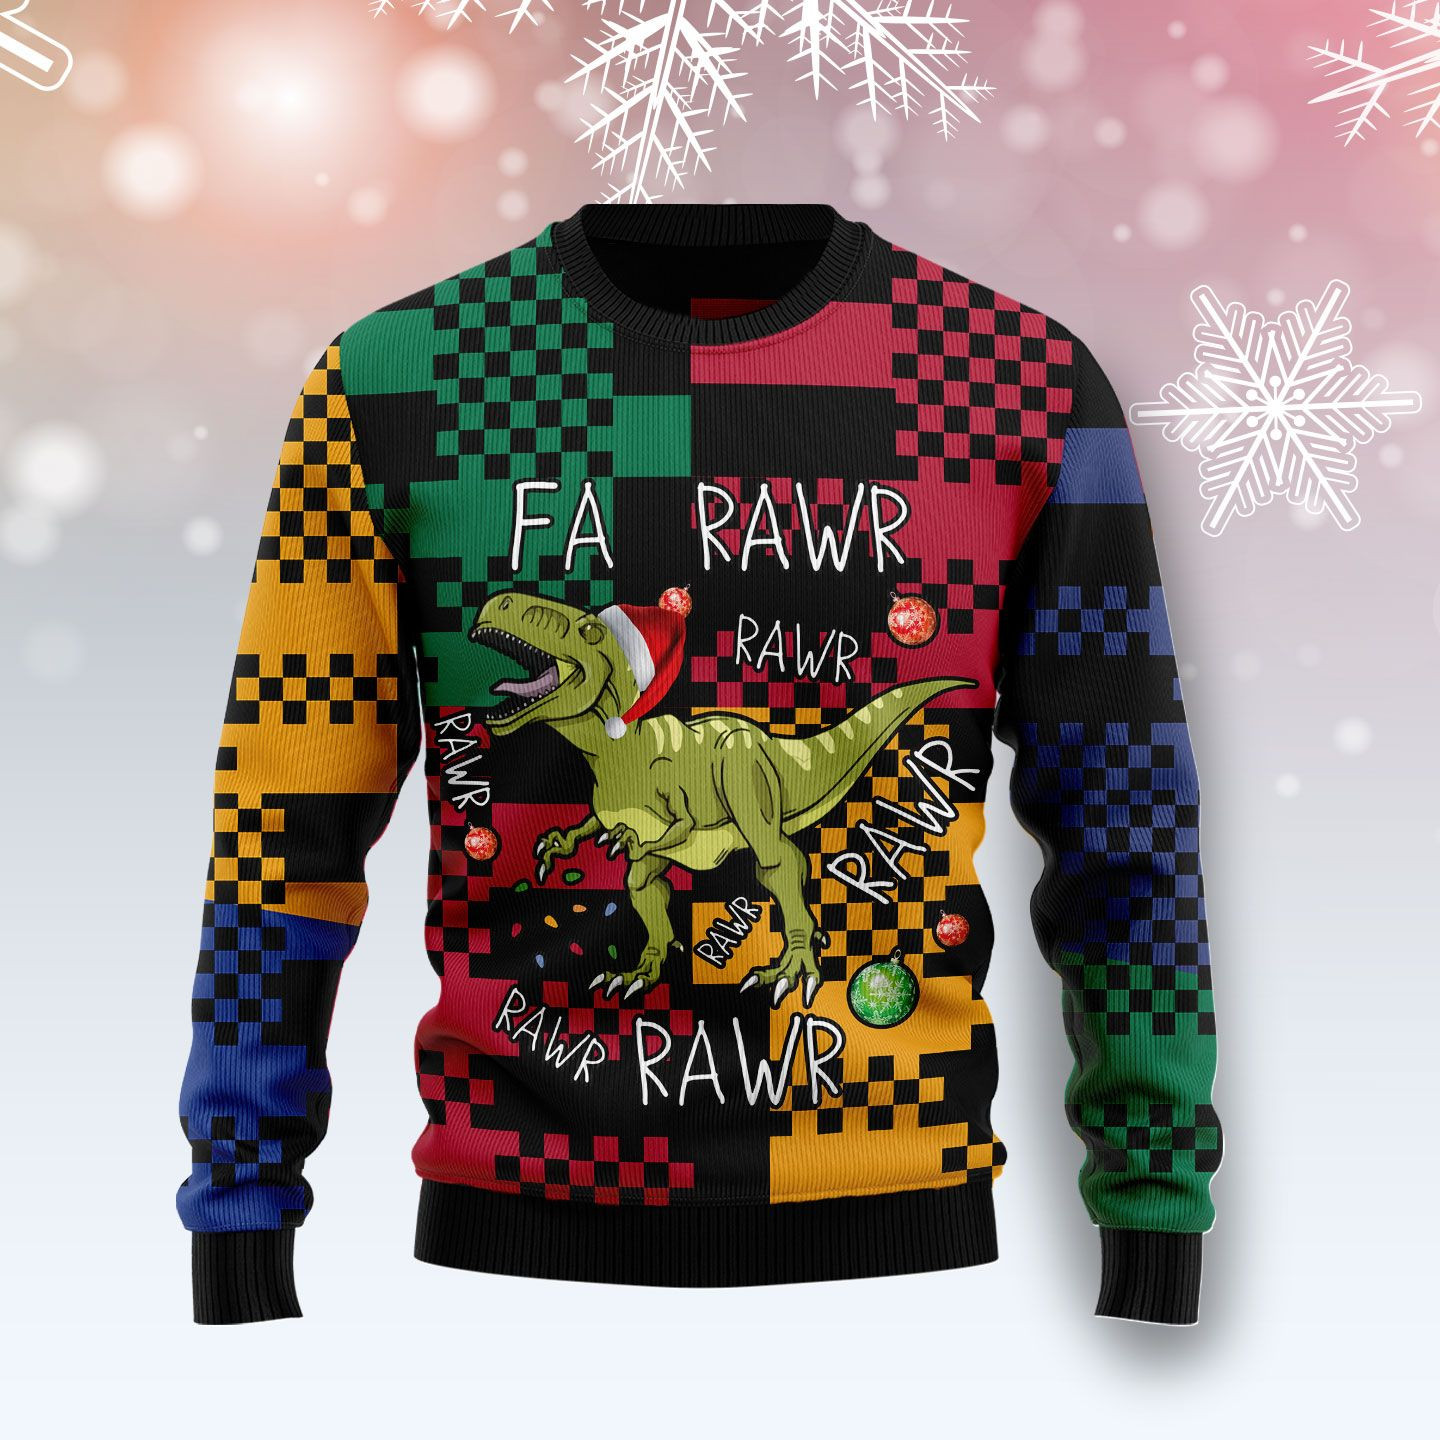 T Rex Rawr Rawr Rawr Ugly Christmas Sweater Ugly Sweater For Men Women